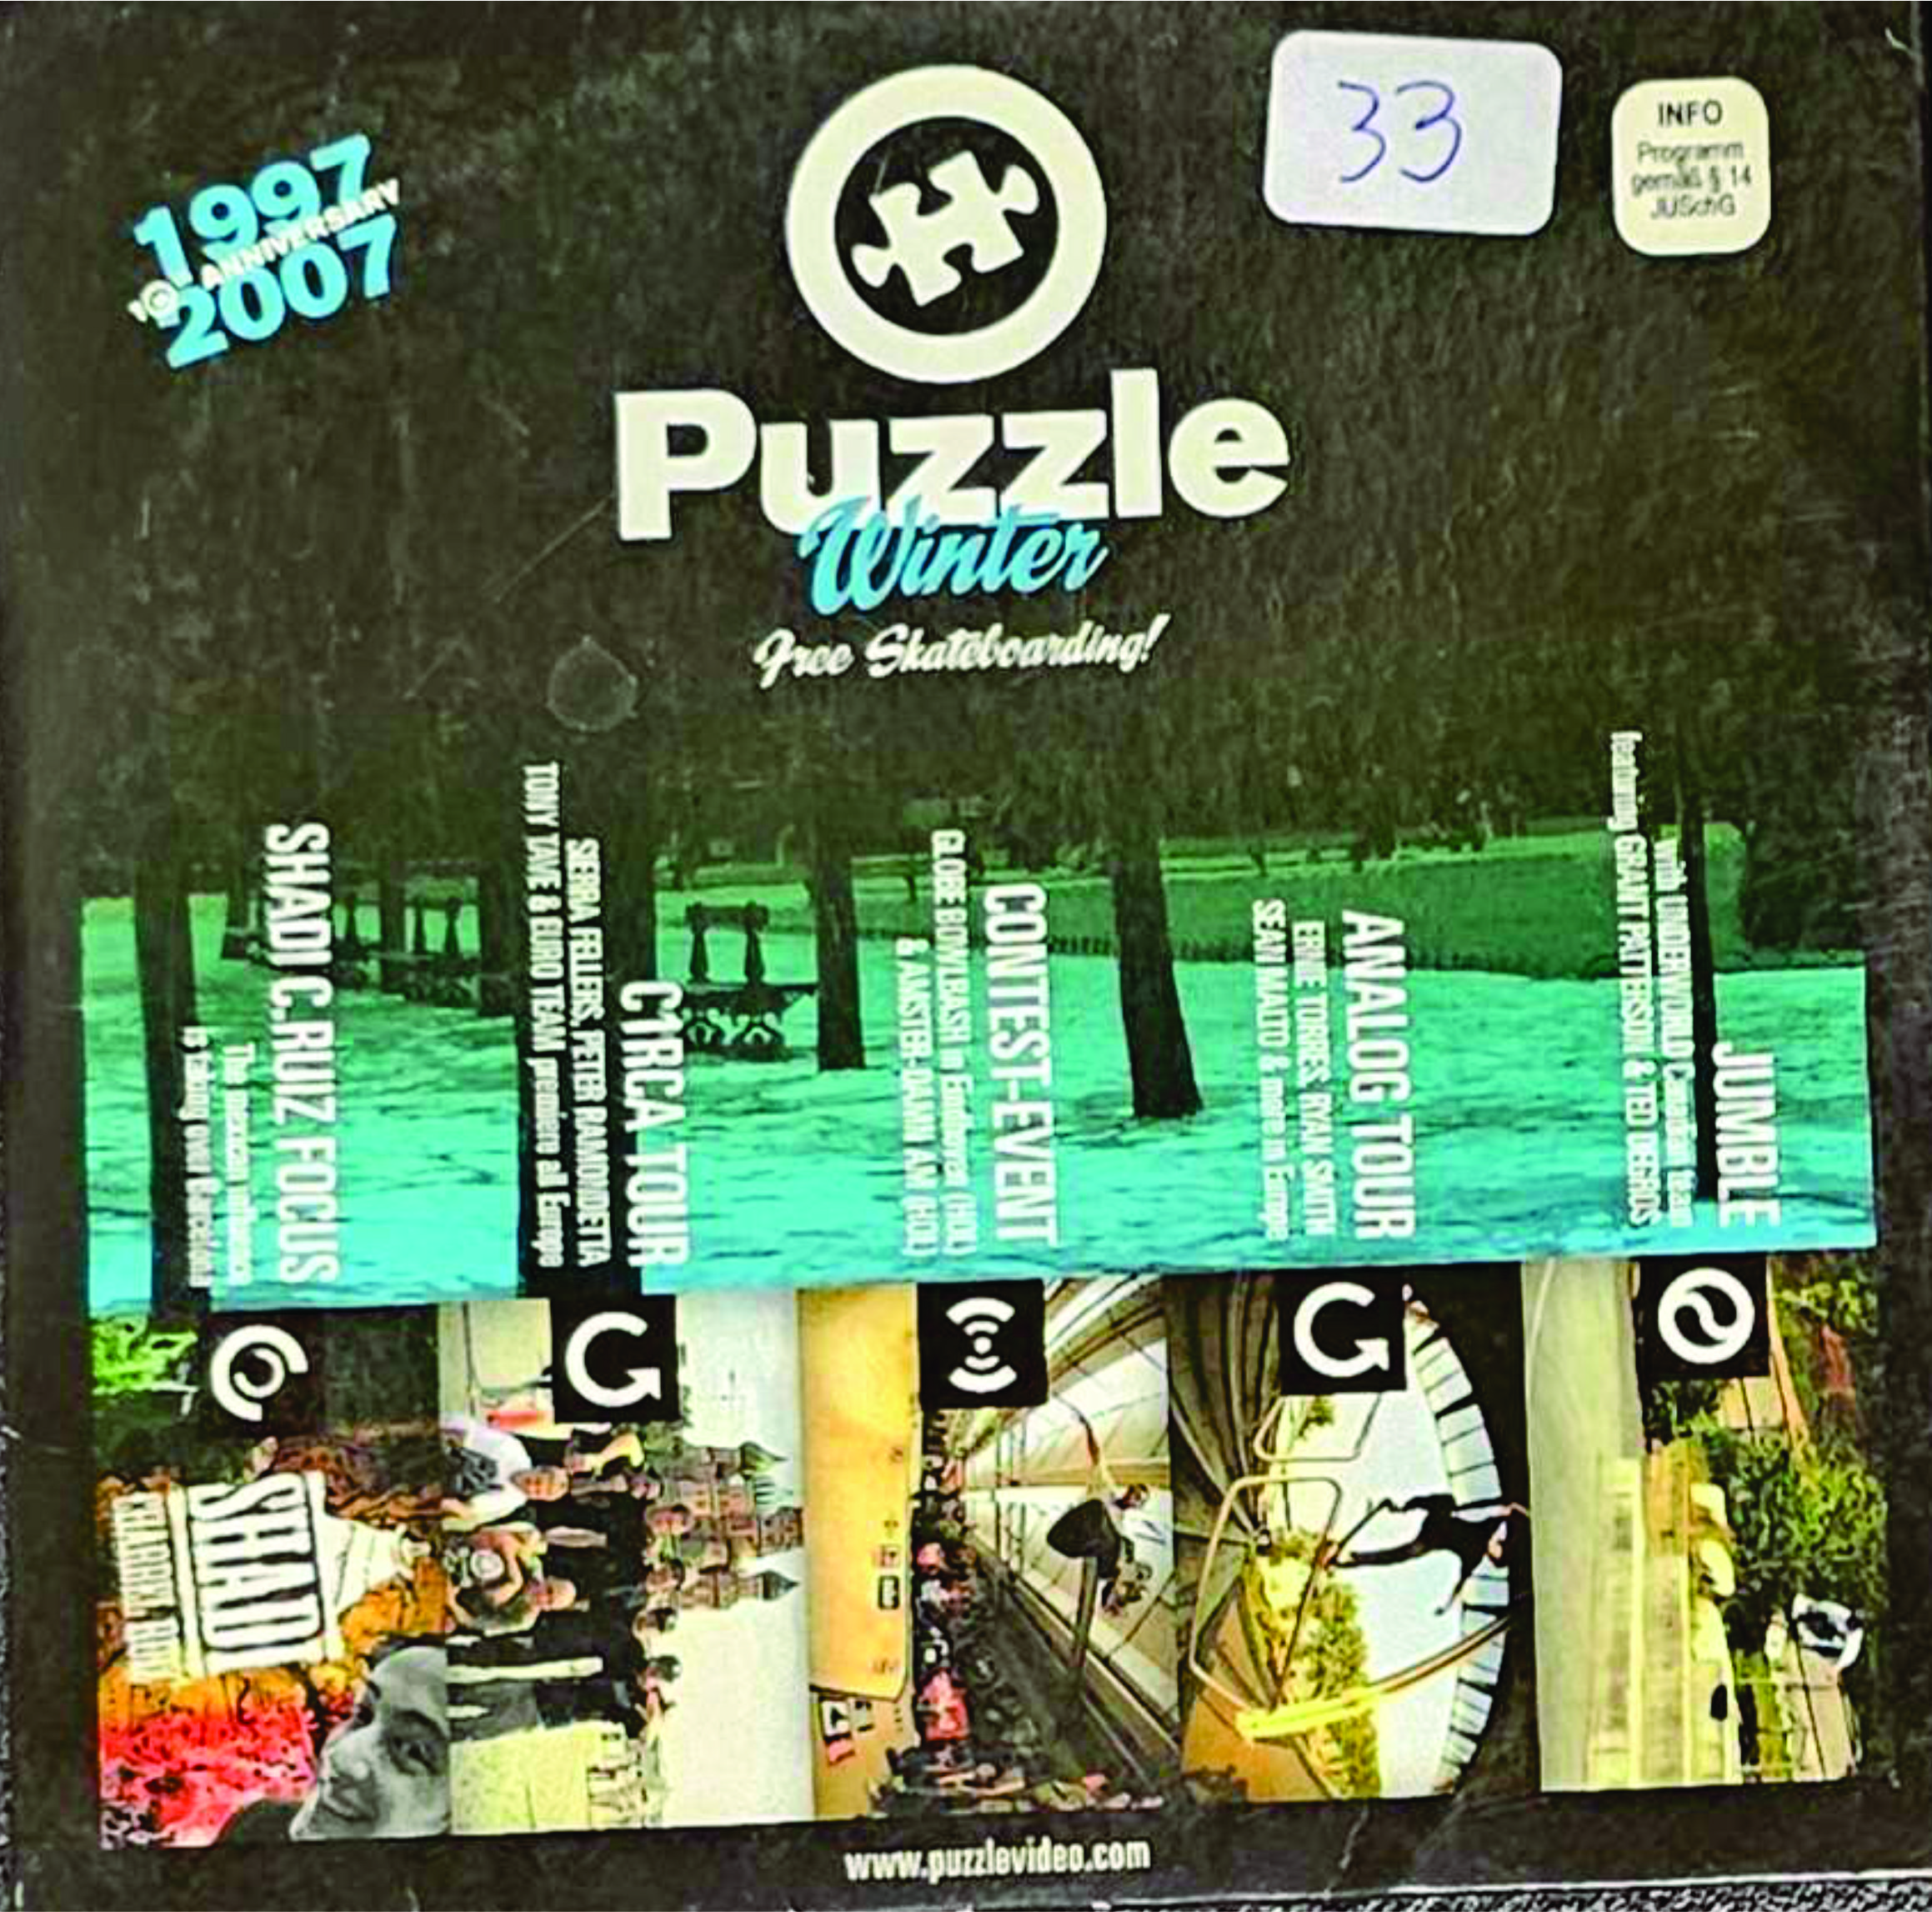 Puzzle Video - Winter 2007 cover art